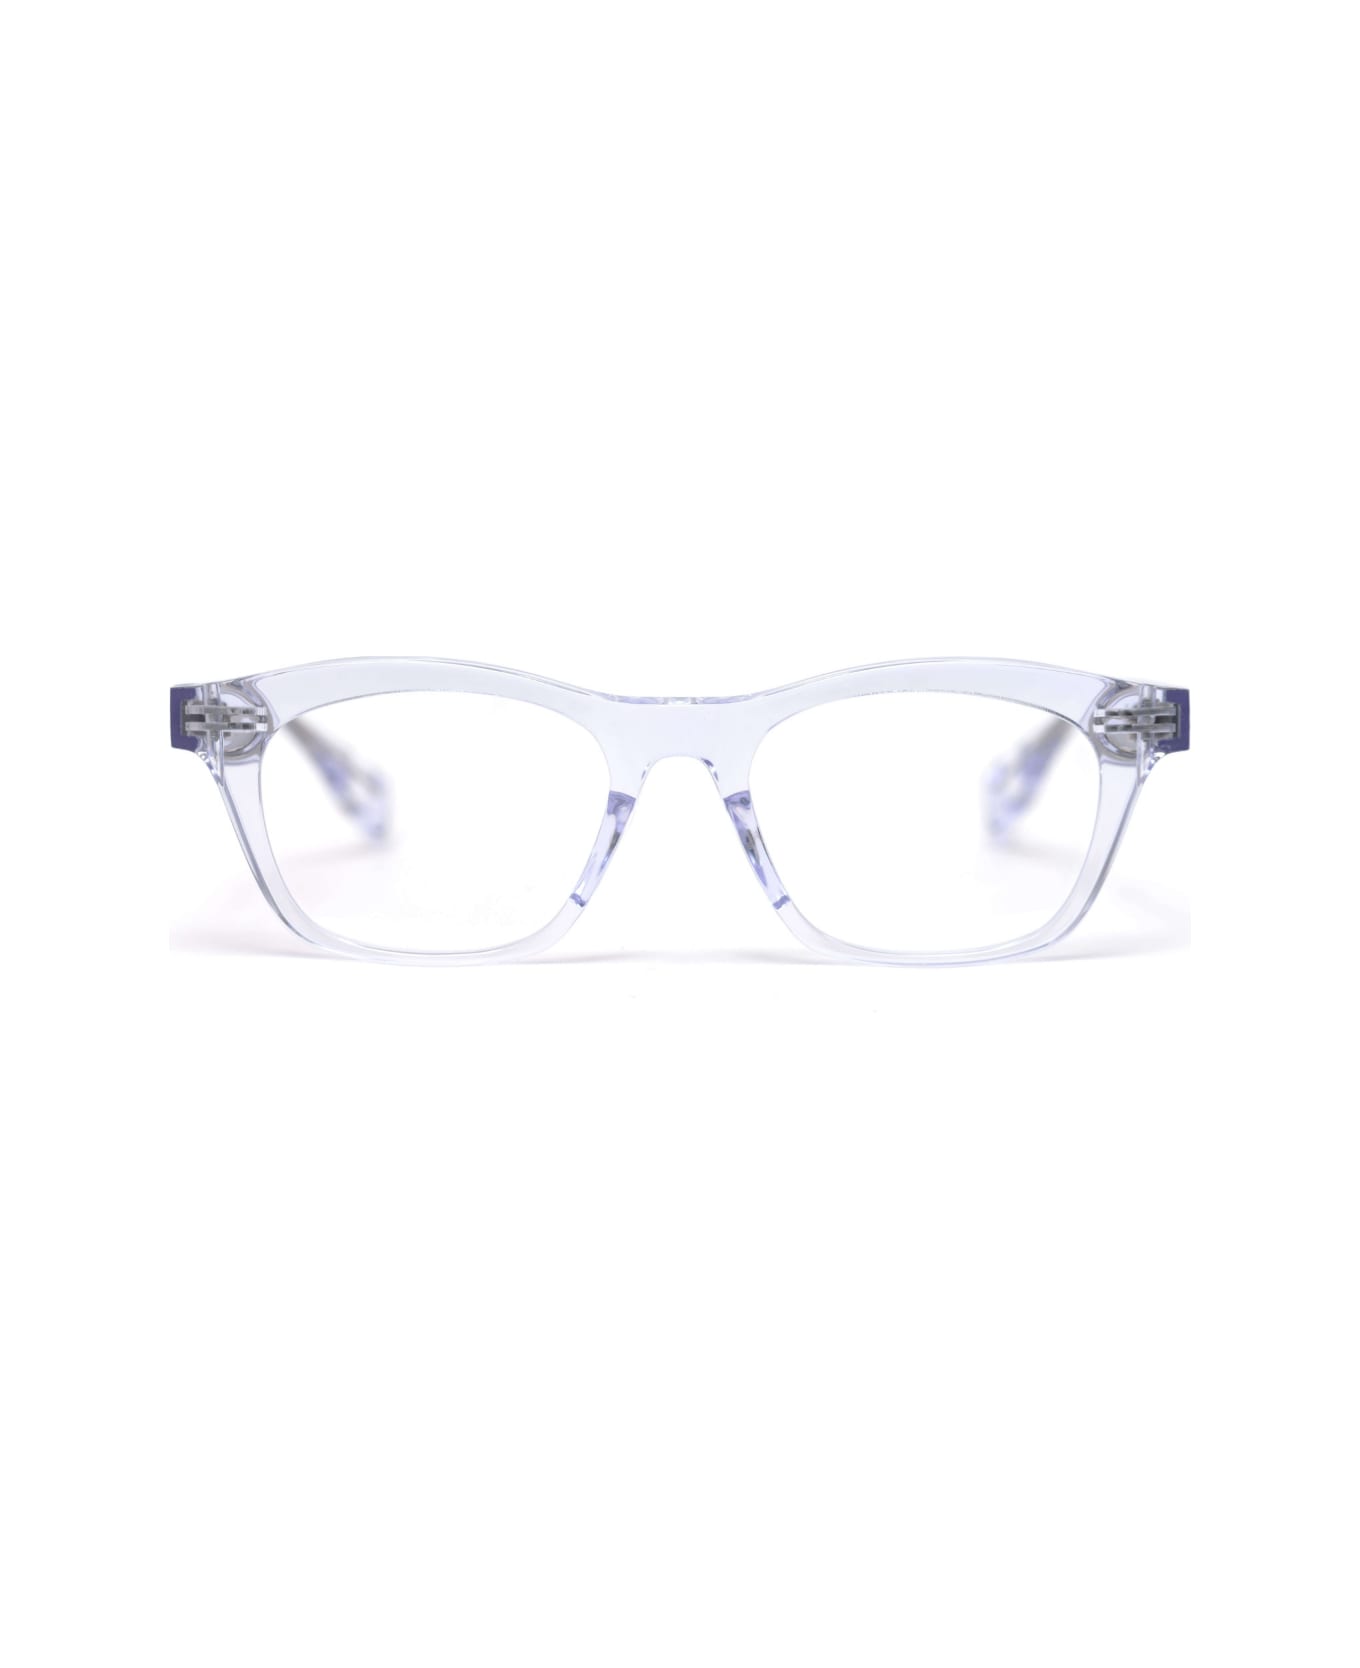 FACTORY900 Rf 080 820 Glasses - Crystal